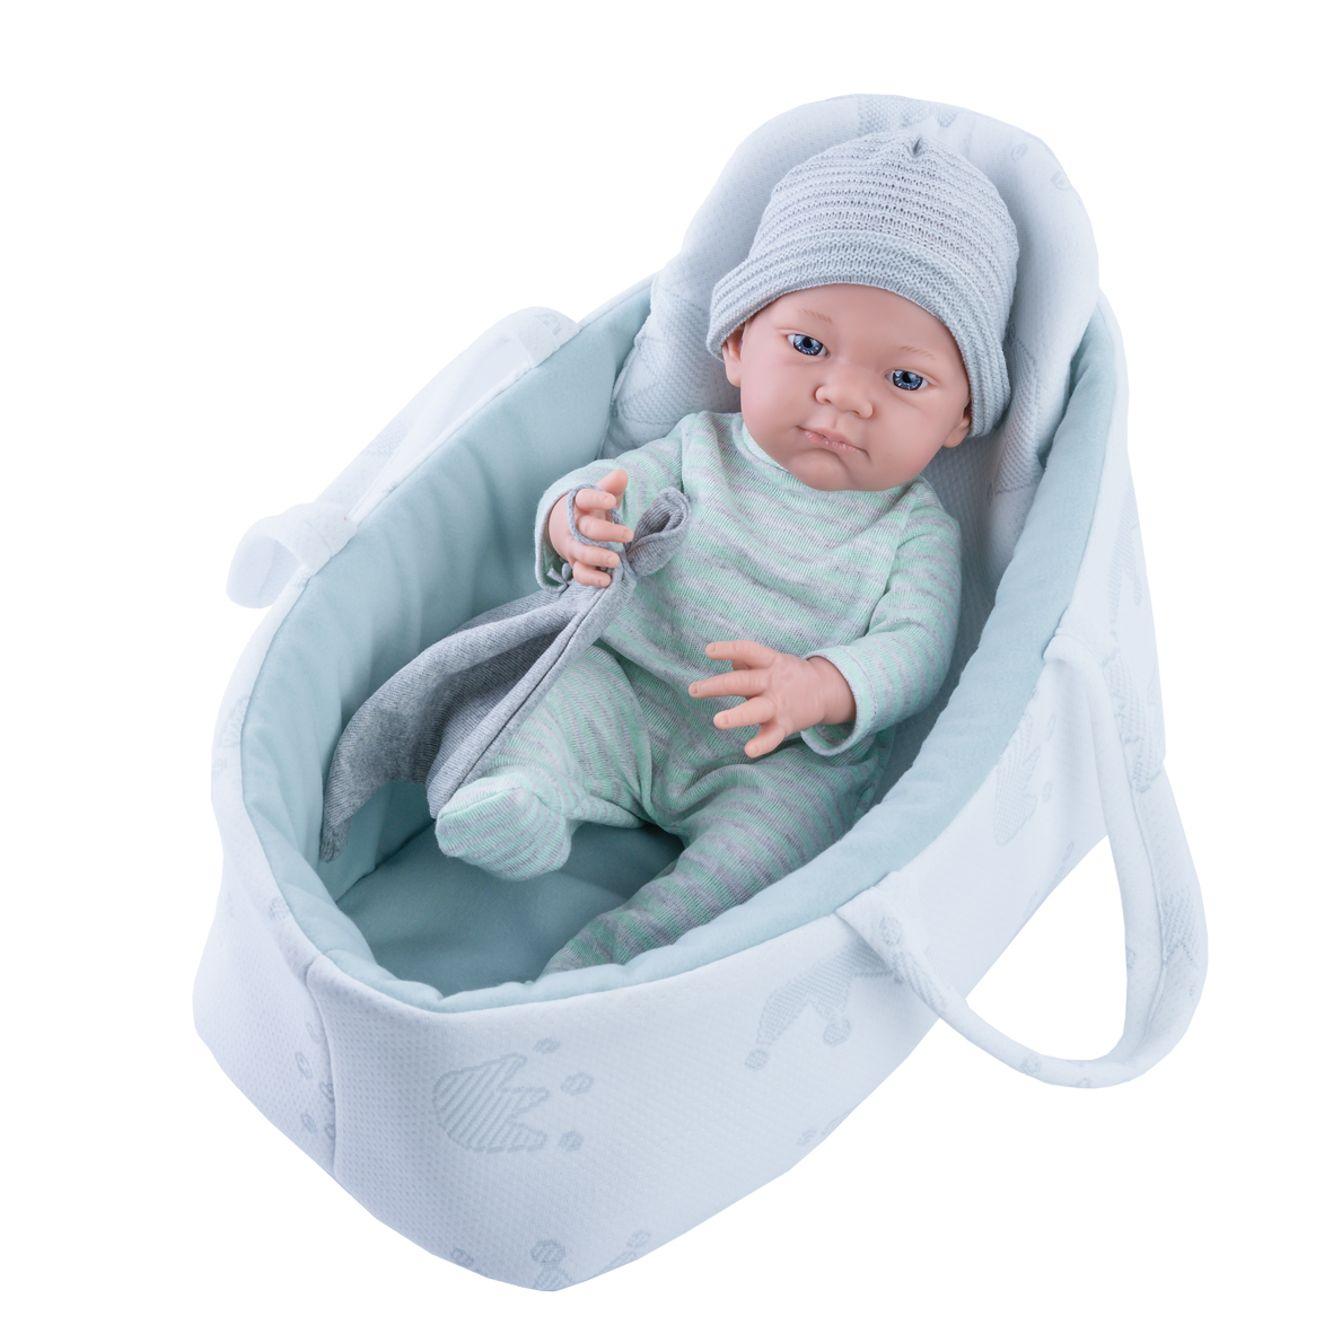 Realistické miminko - kluk - Pikolin v tašce od firmy Paola Reina